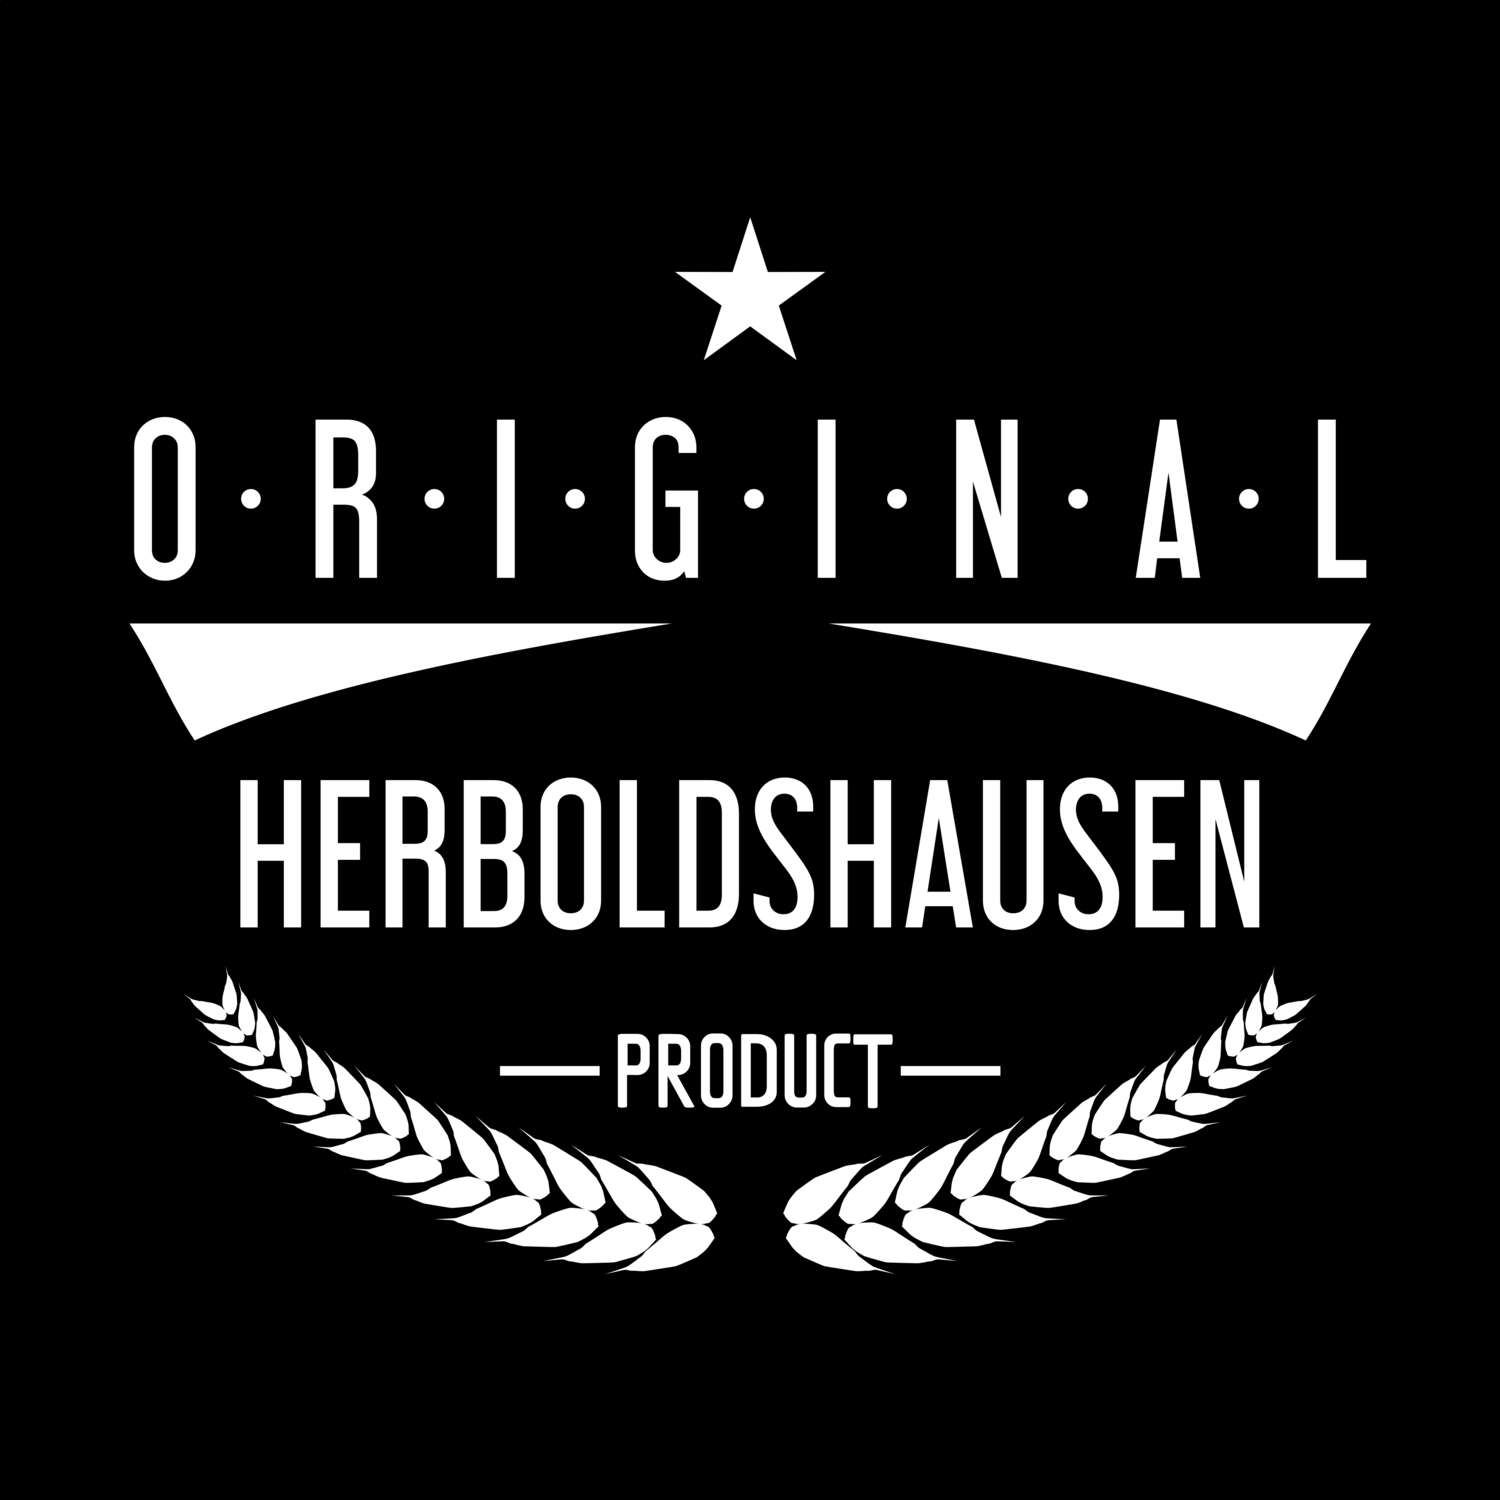 Herboldshausen T-Shirt »Original Product«